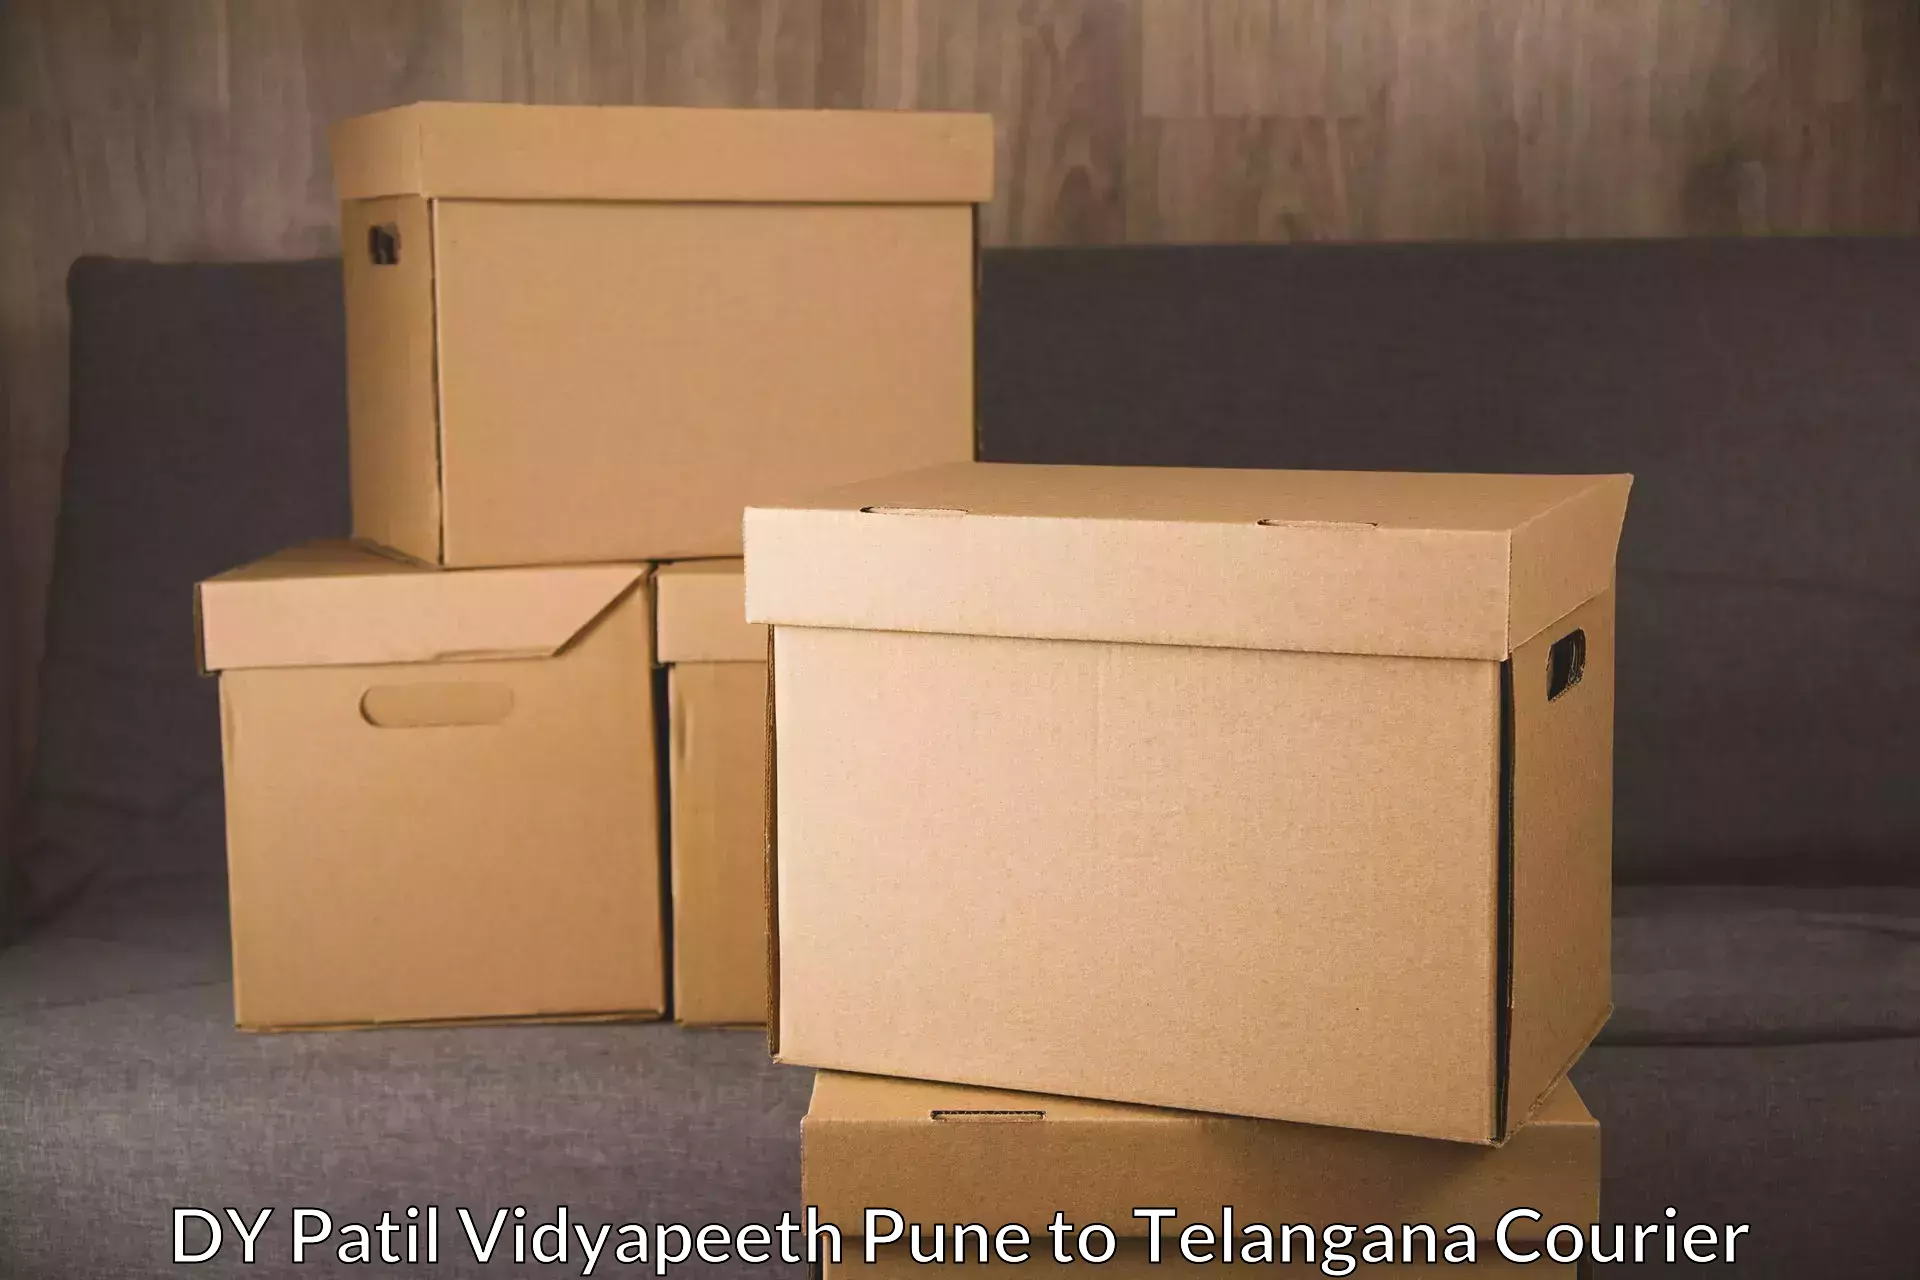 Digital courier platforms DY Patil Vidyapeeth Pune to Mahabubabad